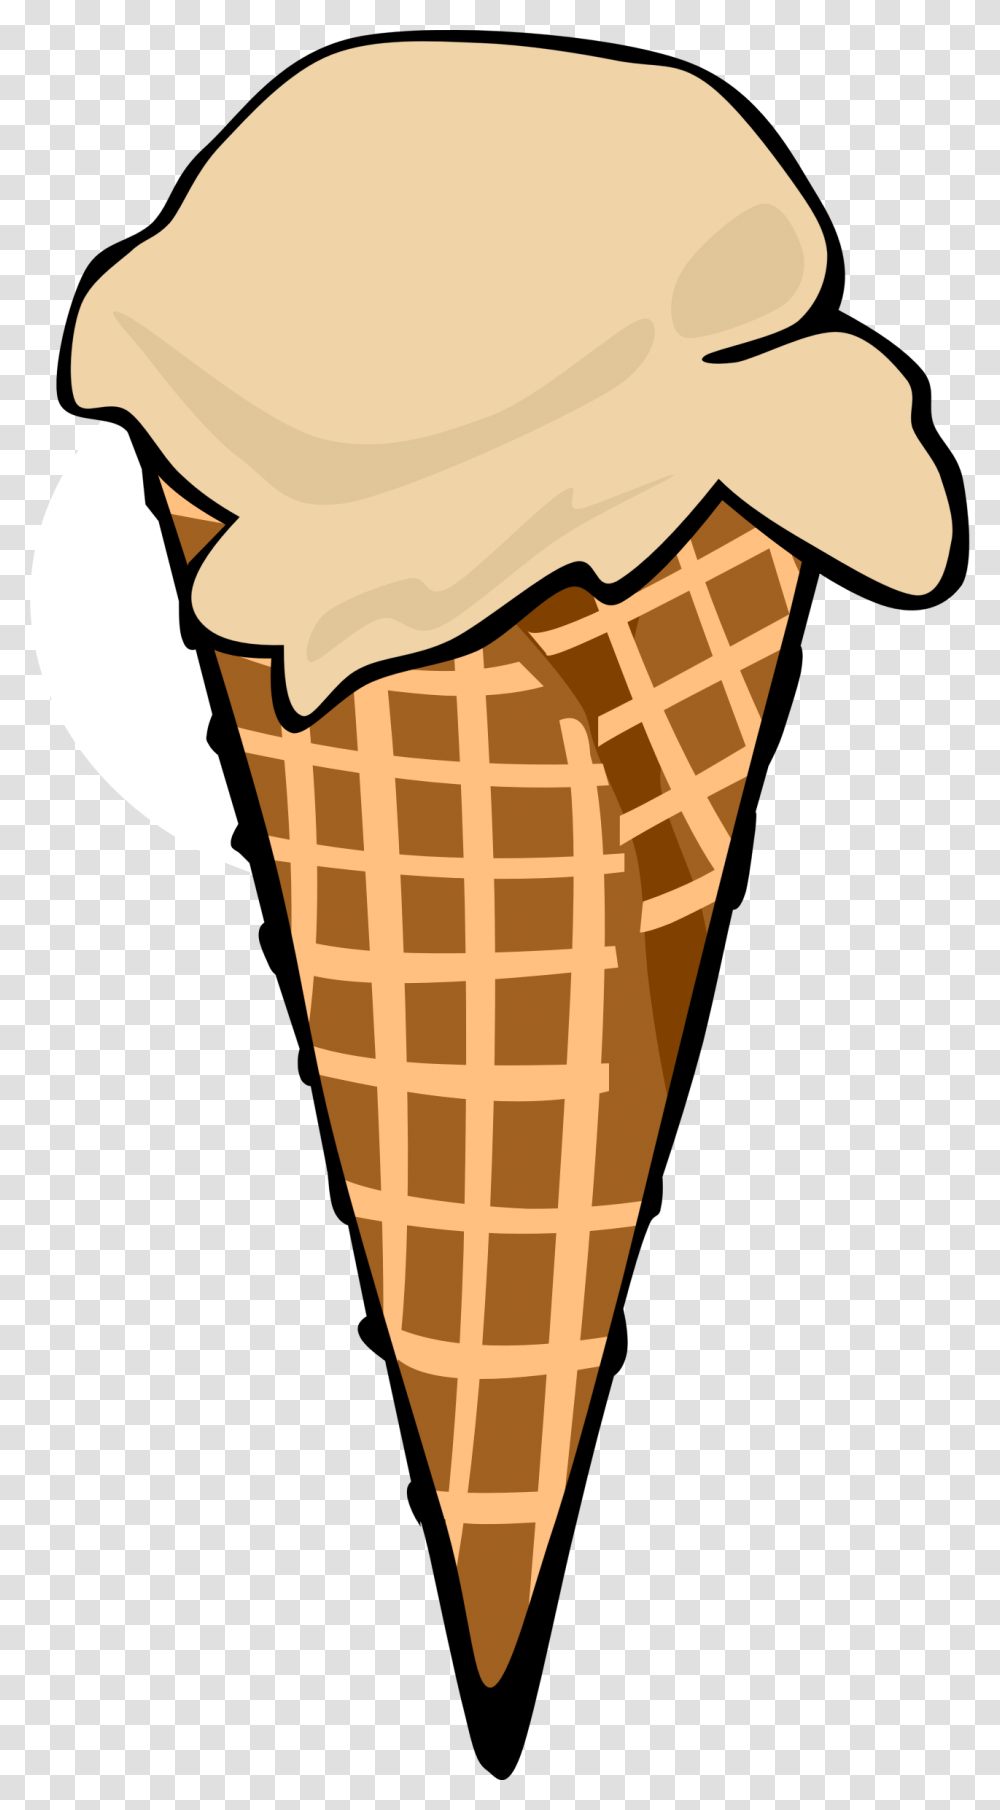 Free Images Of Ice Cream Cones Download Free Clip Art Free Clip, Dessert, Food, Creme Transparent Png